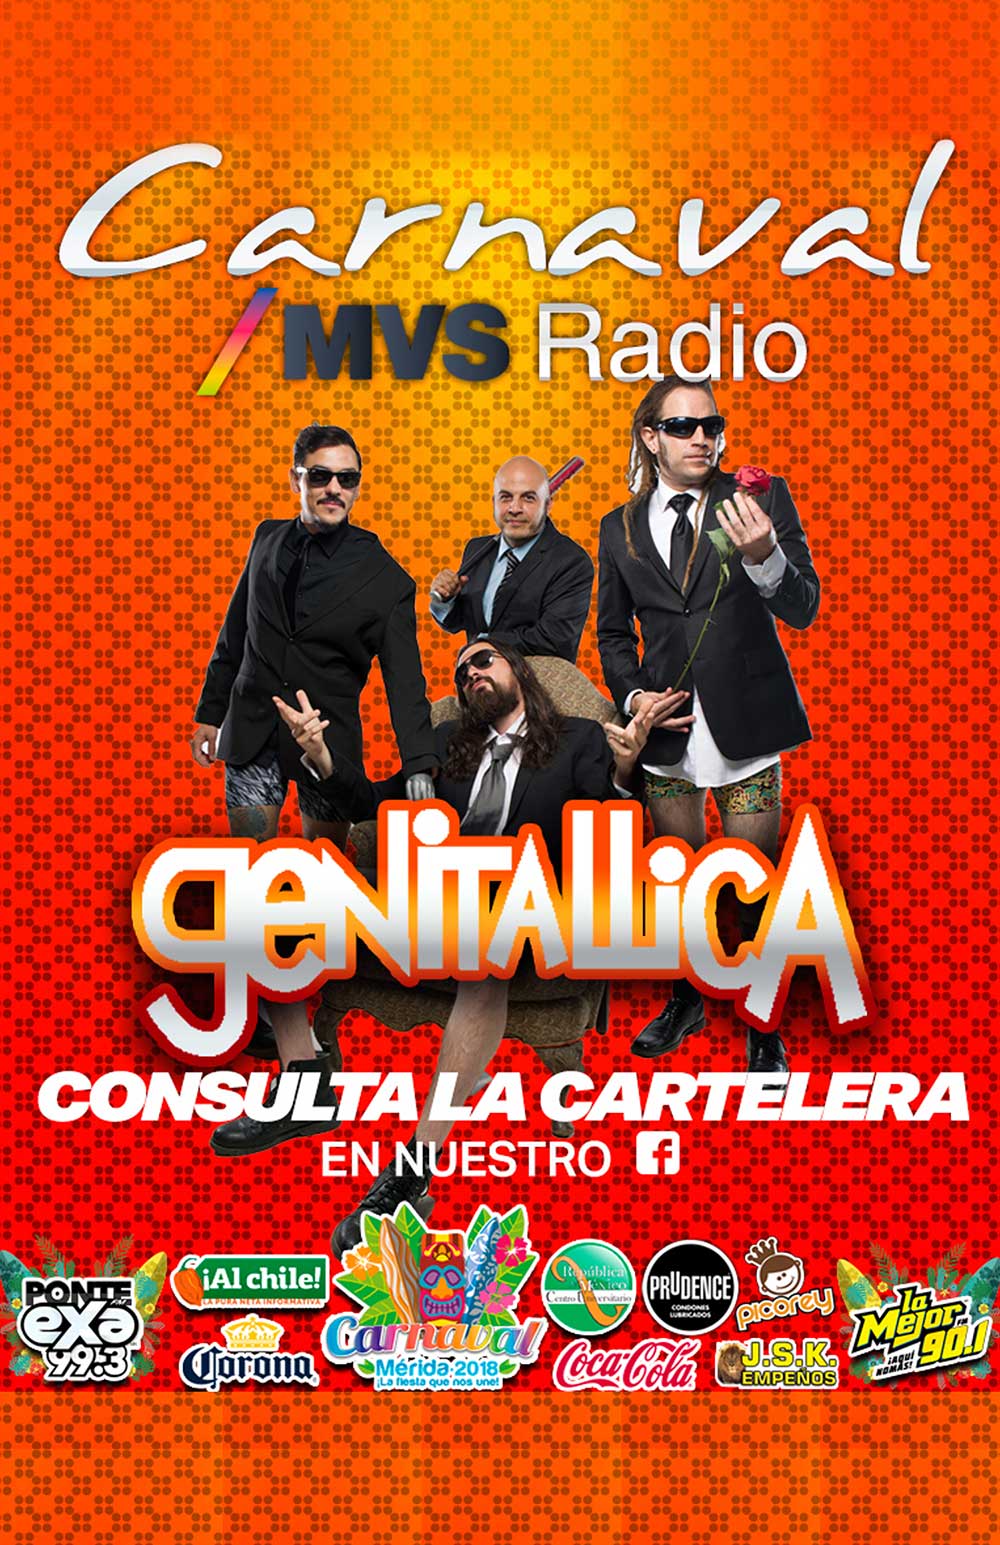 Genitallica @ Carnaval MVS Radio